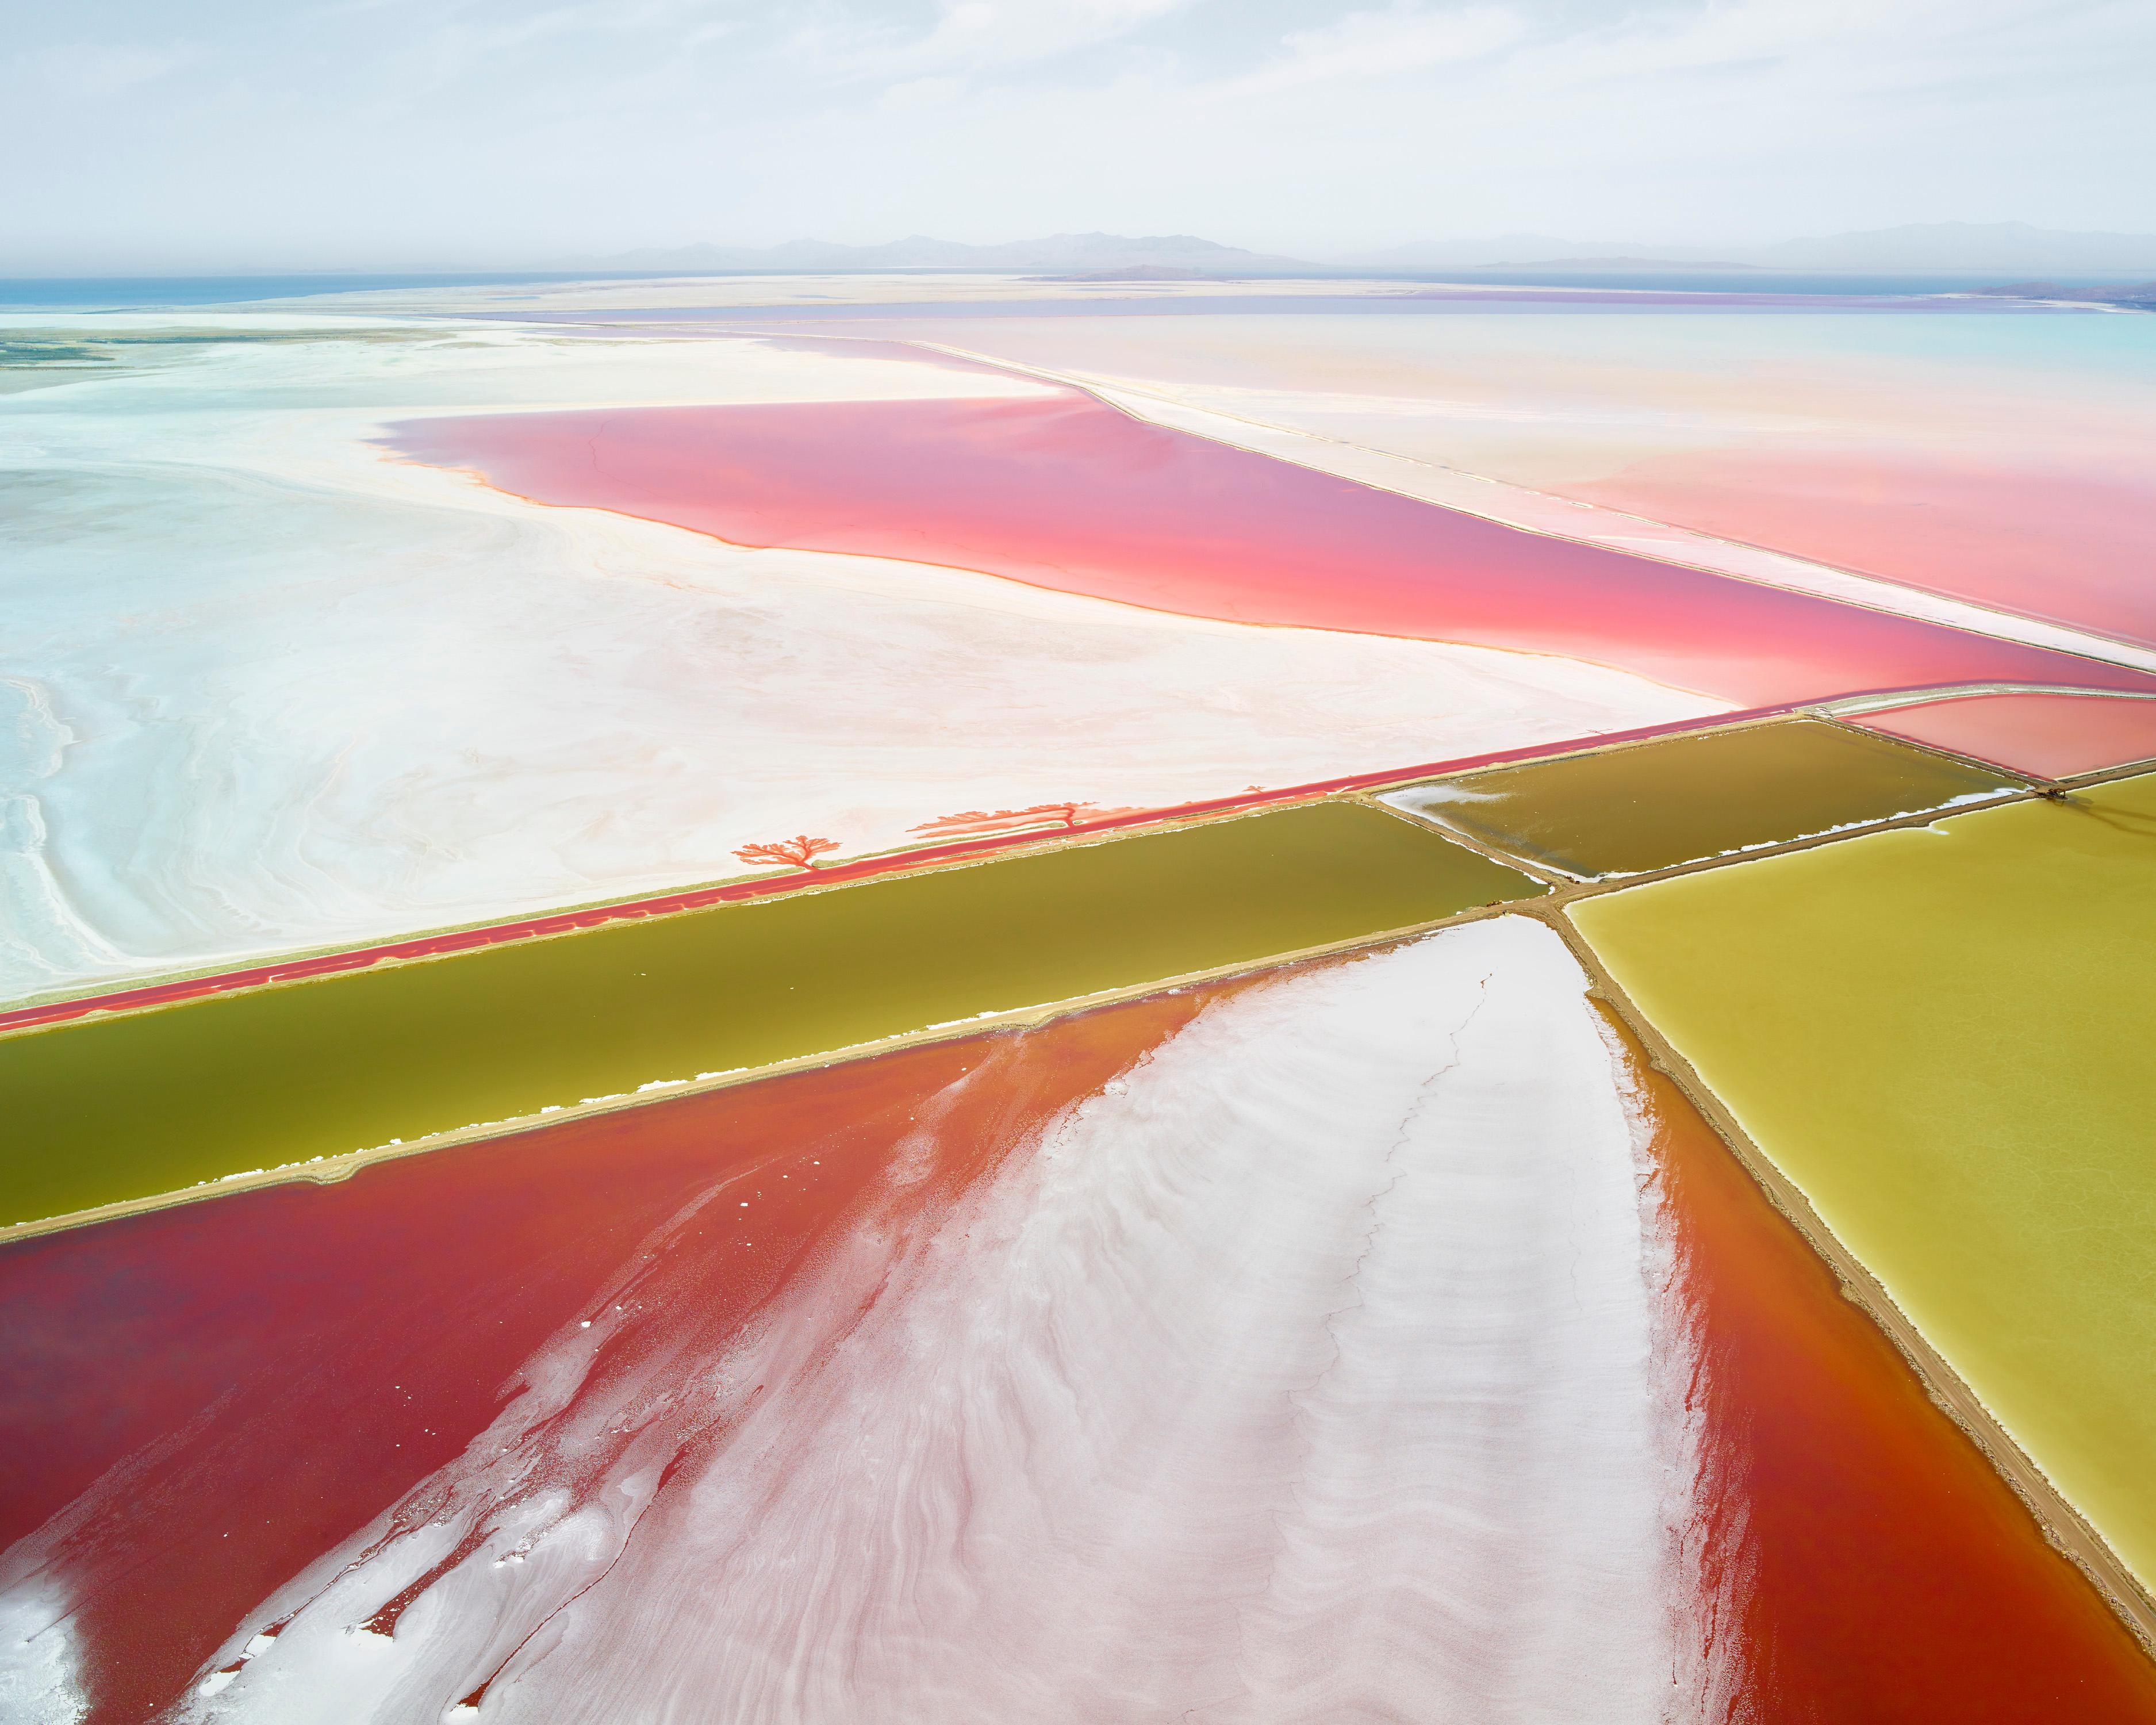 David Burdeny Color Photograph - Saltern Study 02, Great Salt Lake, UT (21” x 26”)